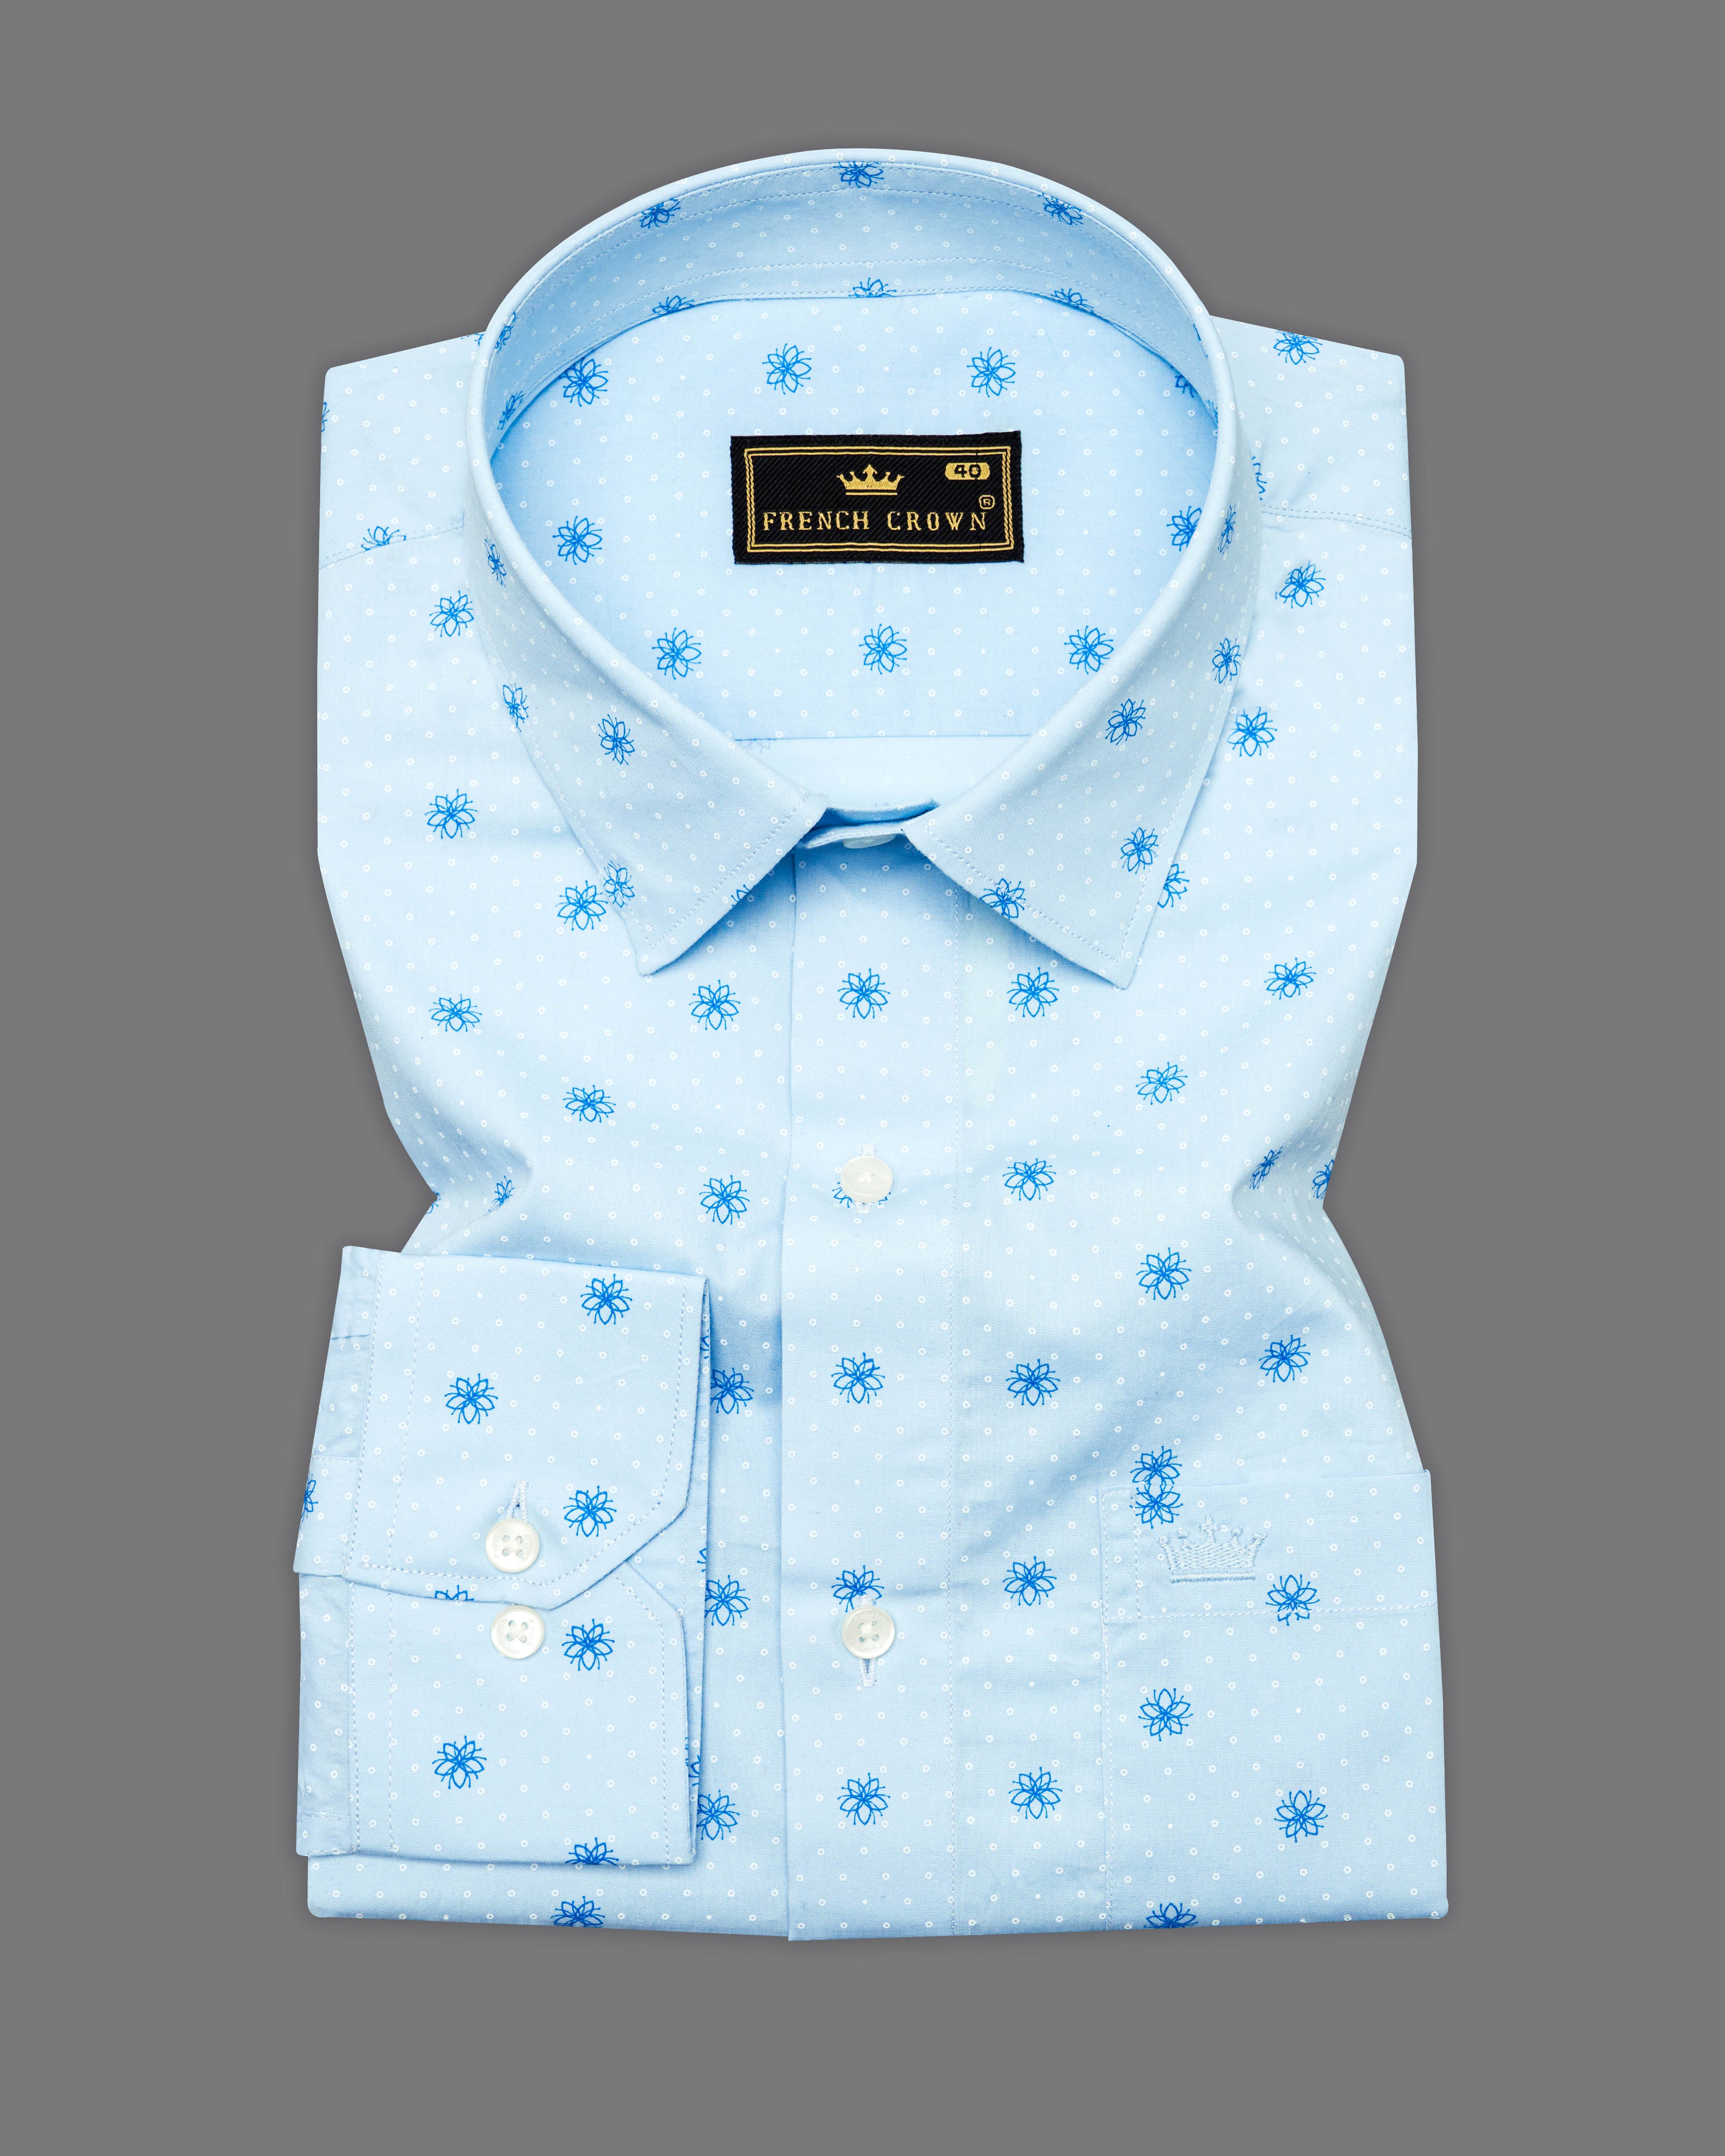  Geyser Sky Blue Ditsy Printed Premium Cotton Shirt 9592-38,9592-H-38,9592-39,9592-H-39,9592-40,9592-H-40,9592-42,9592-H-42,9592-44,9592-H-44,9592-46,9592-H-46,9592-48,9592-H-48,9592-50,9592-H-50,9592-52,9592-H-52